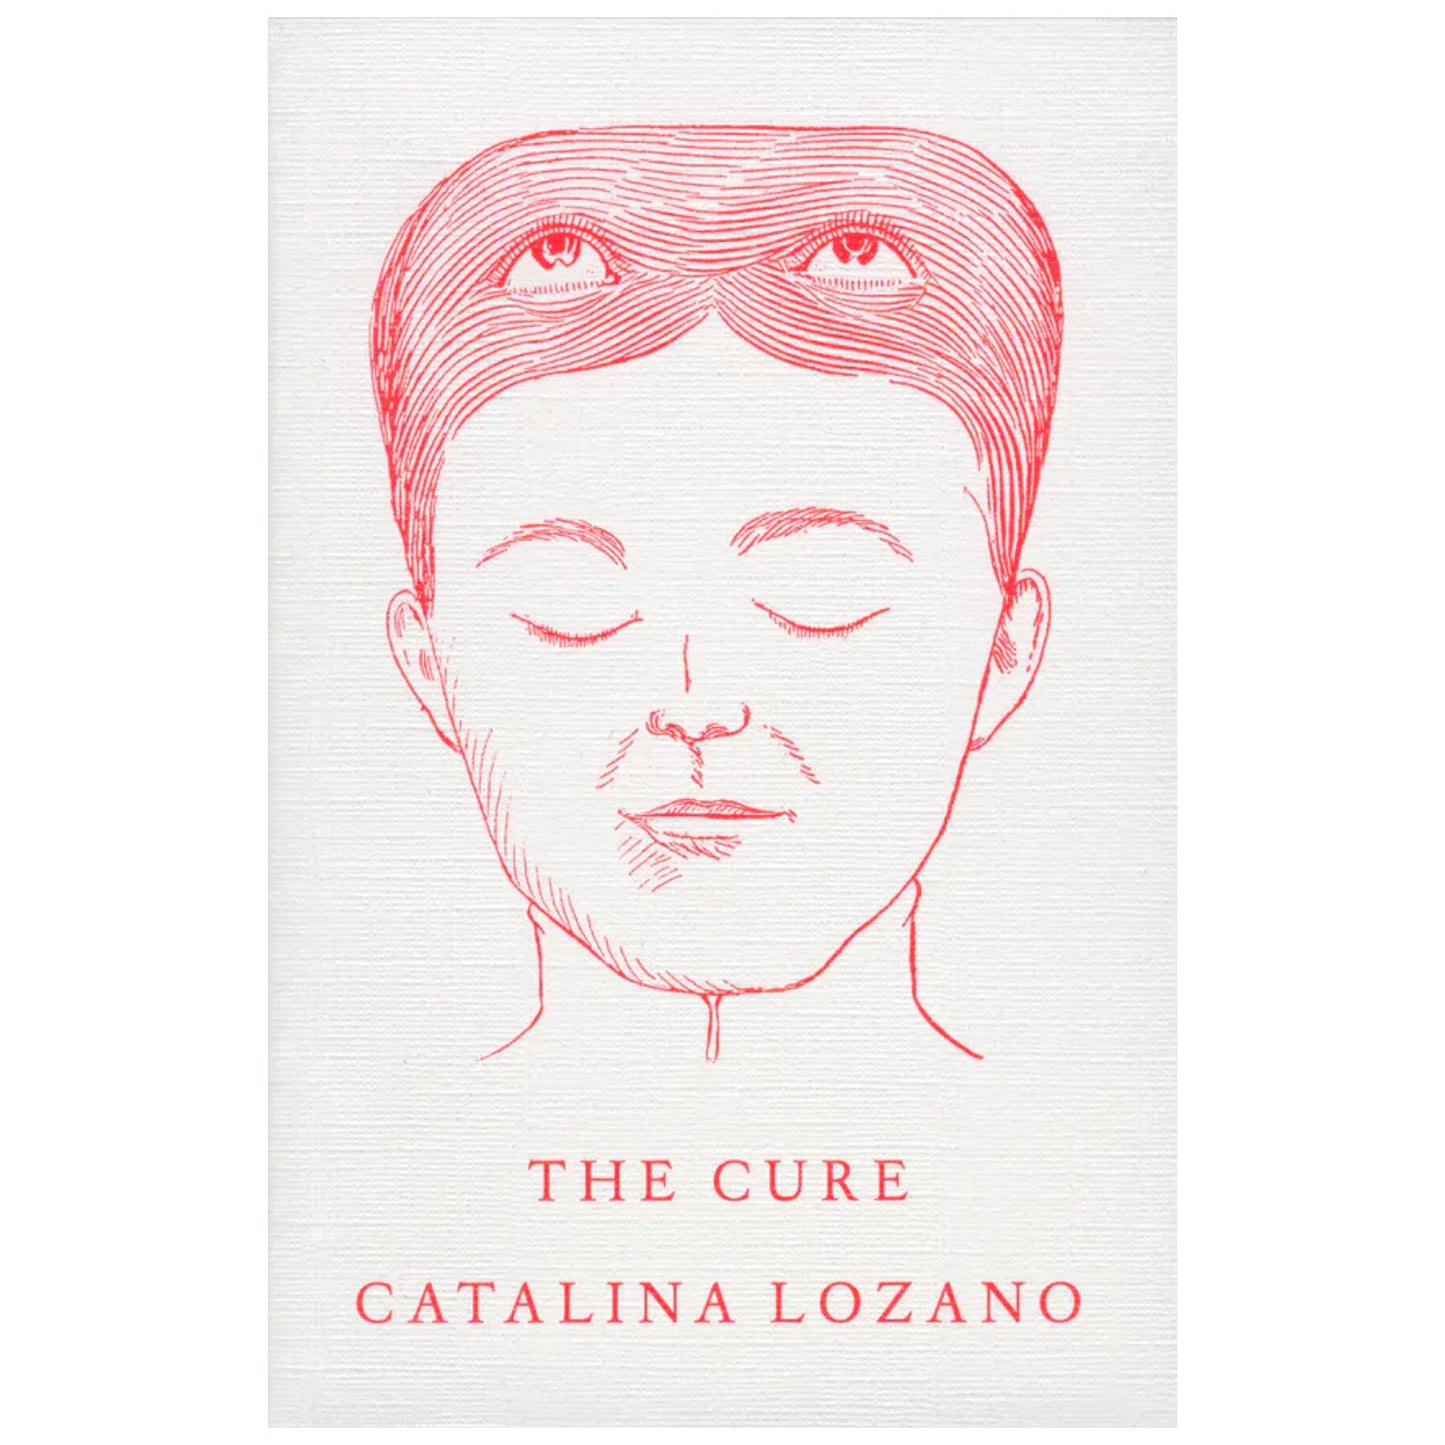 The Cure by Catalina Lozano. Photo Museum Ireland.